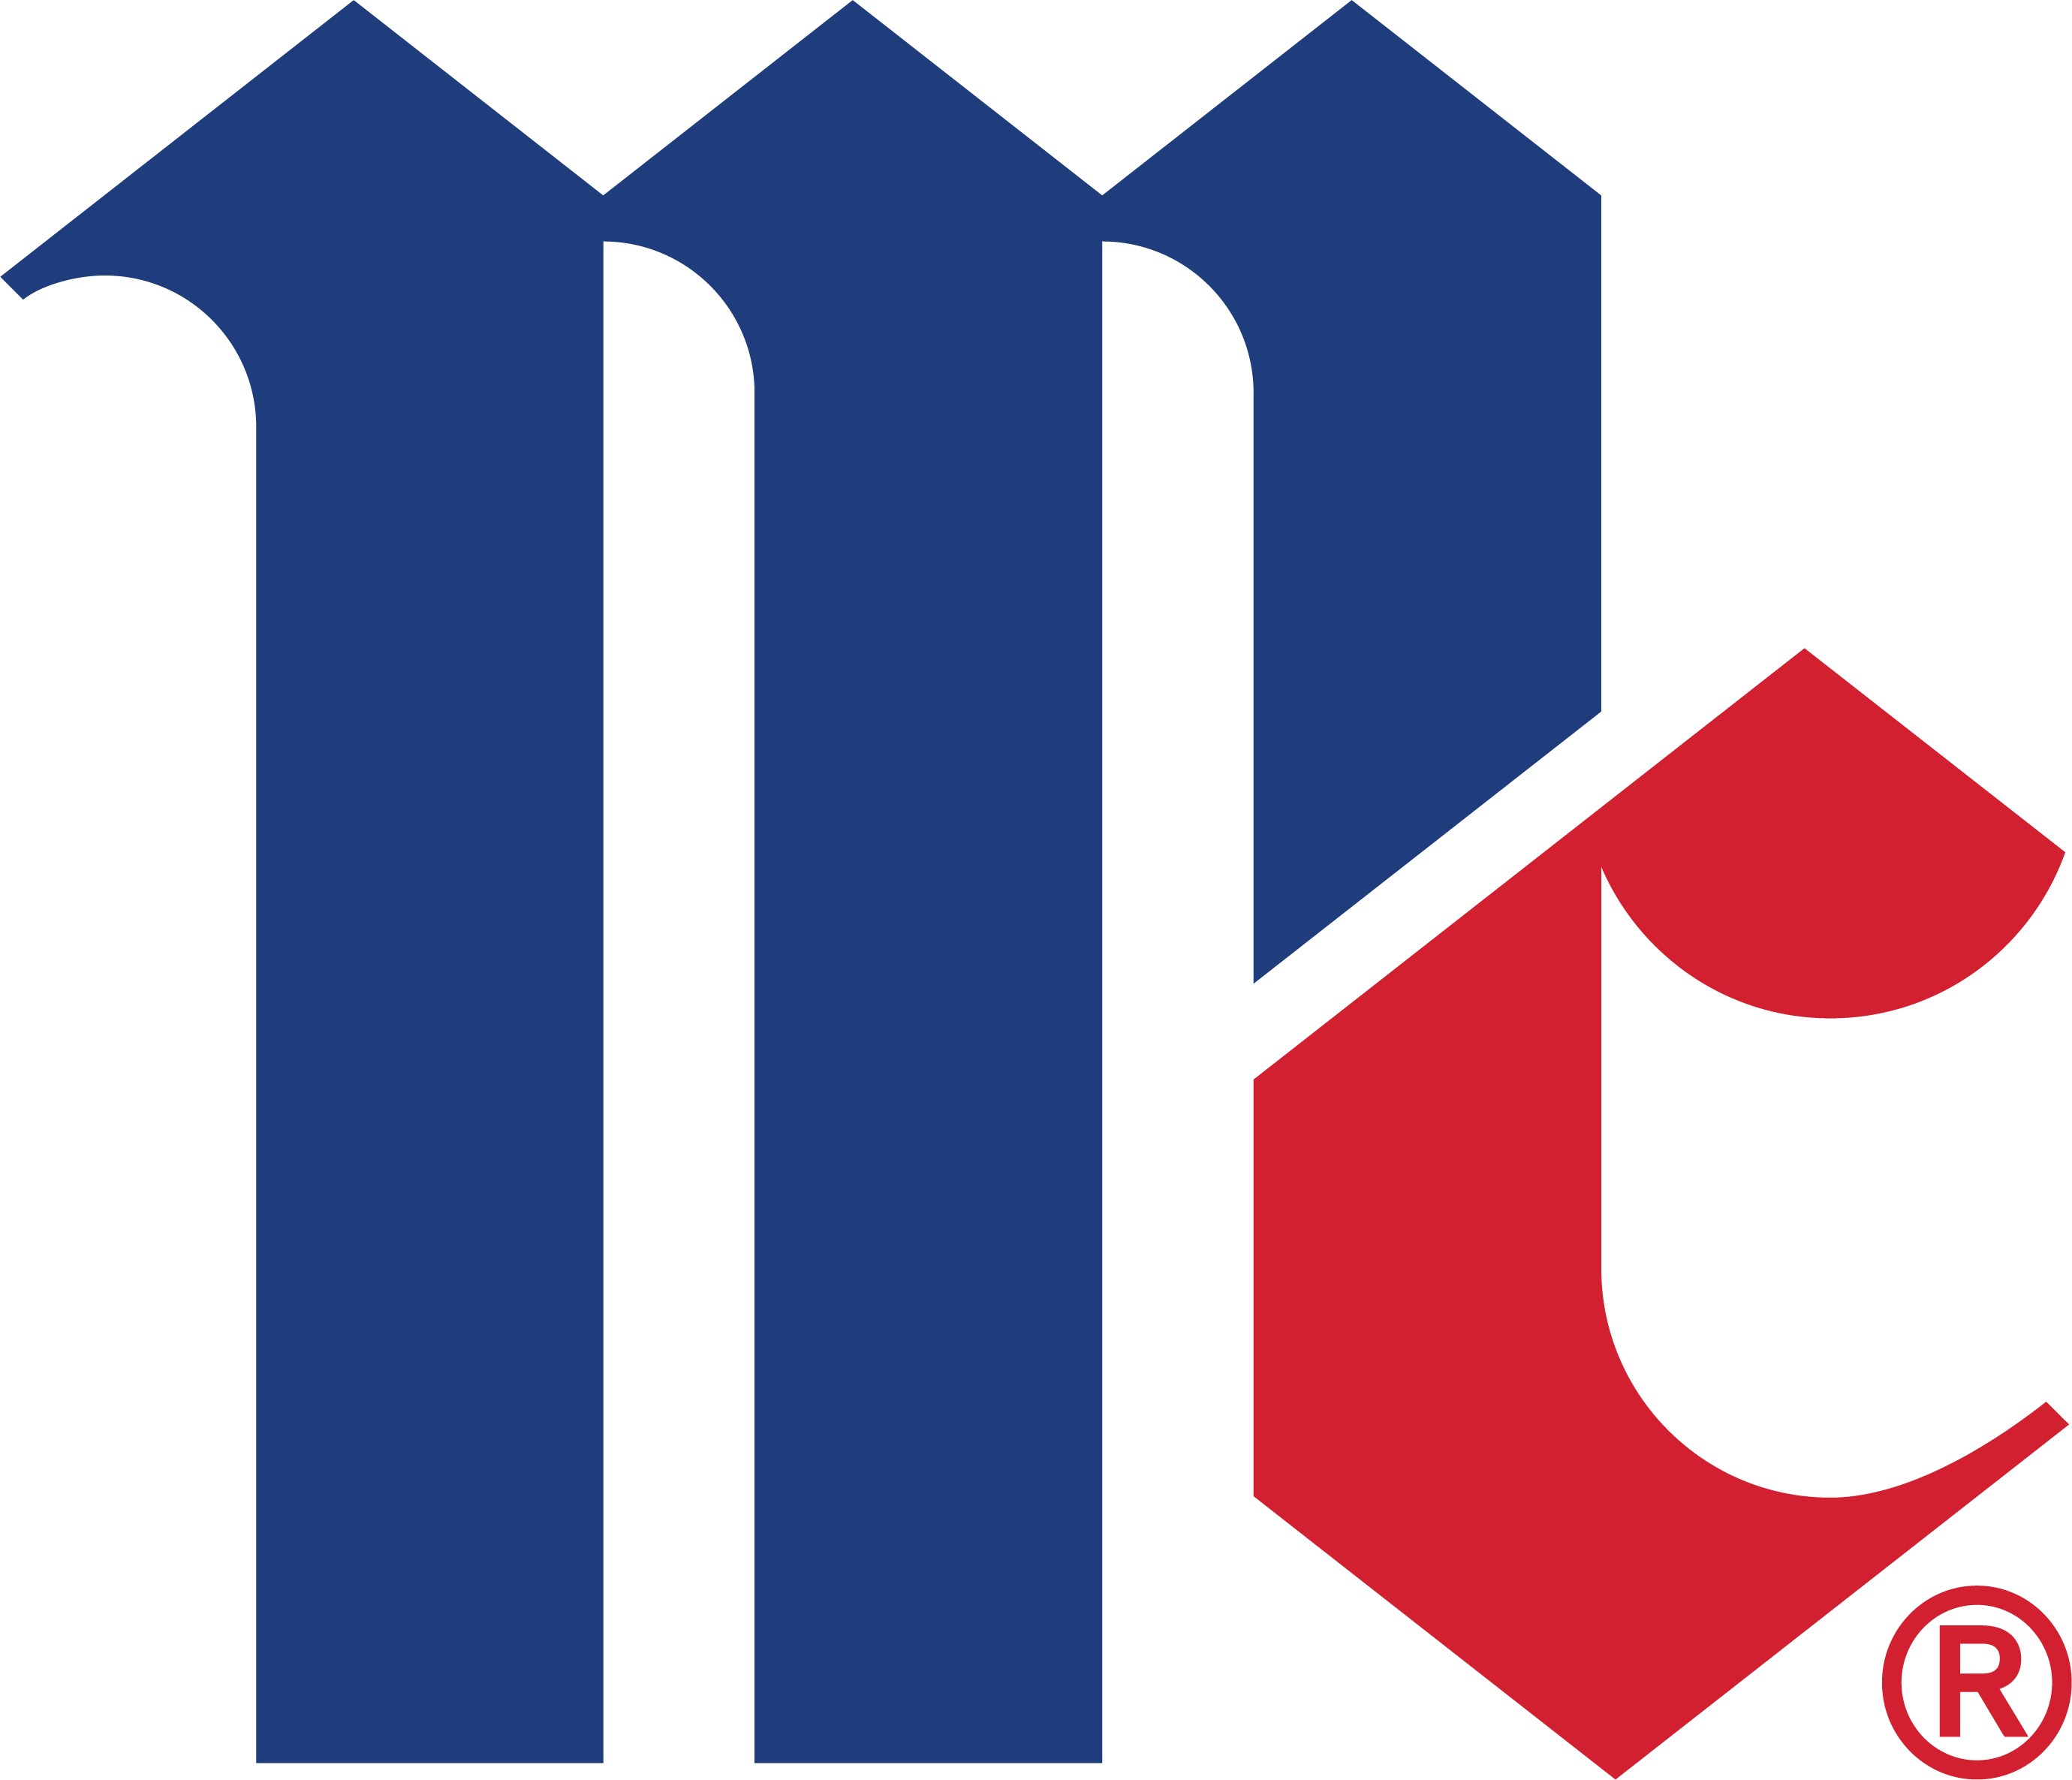 McCormick Brand Logo